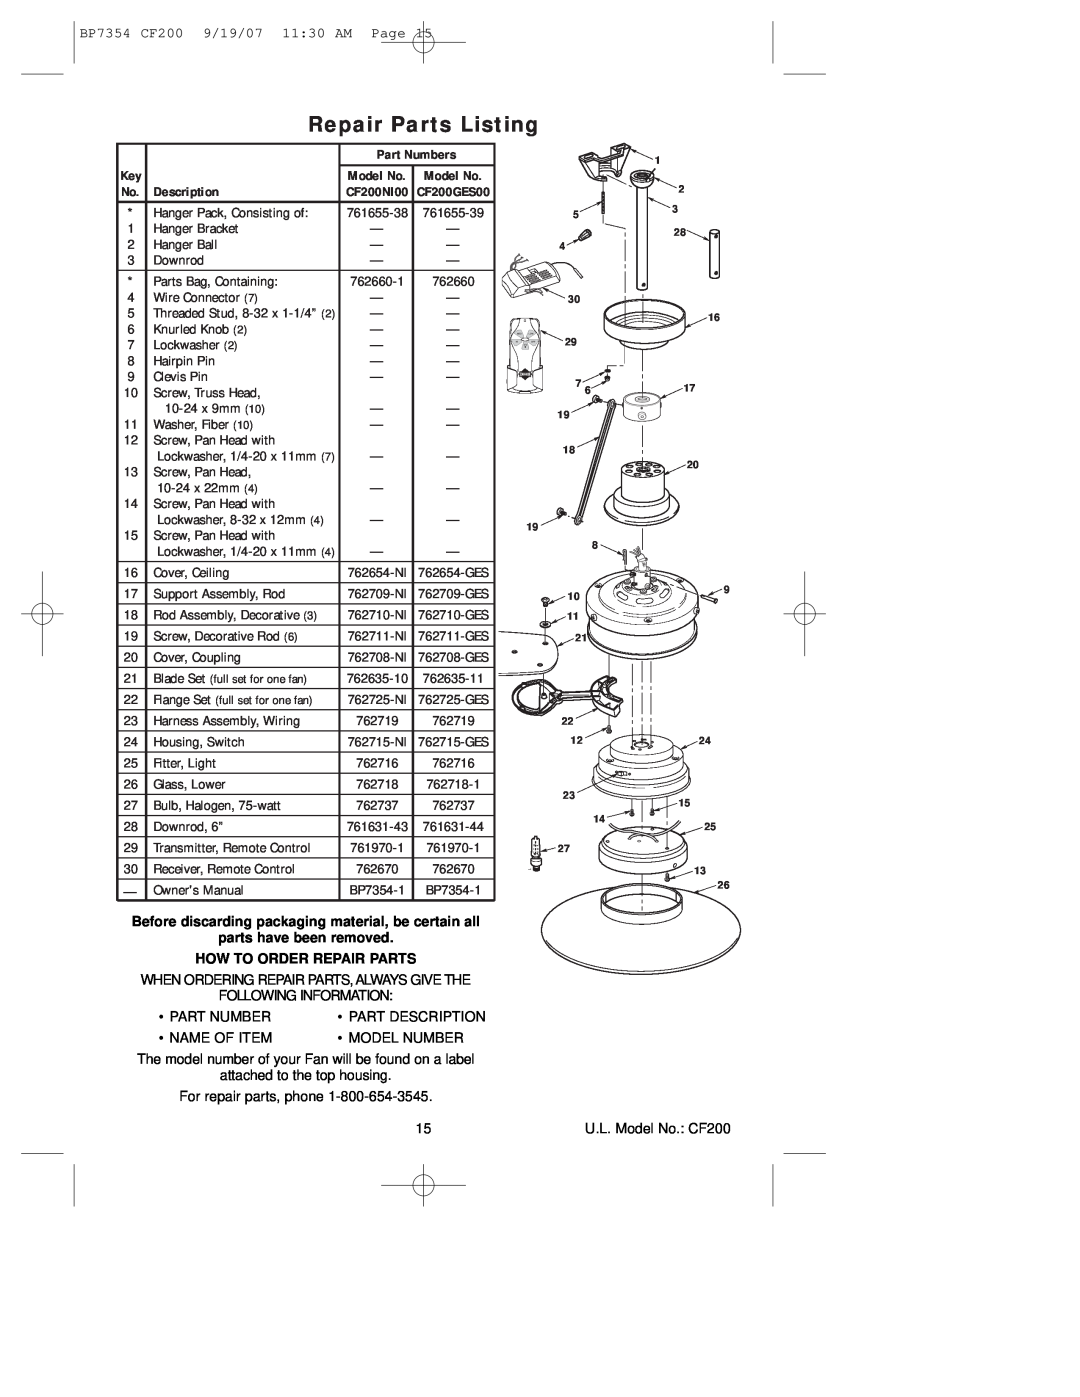 Emerson CF200n100 owner manual Repair Parts Listing, Part Numbers, Model No, Description 